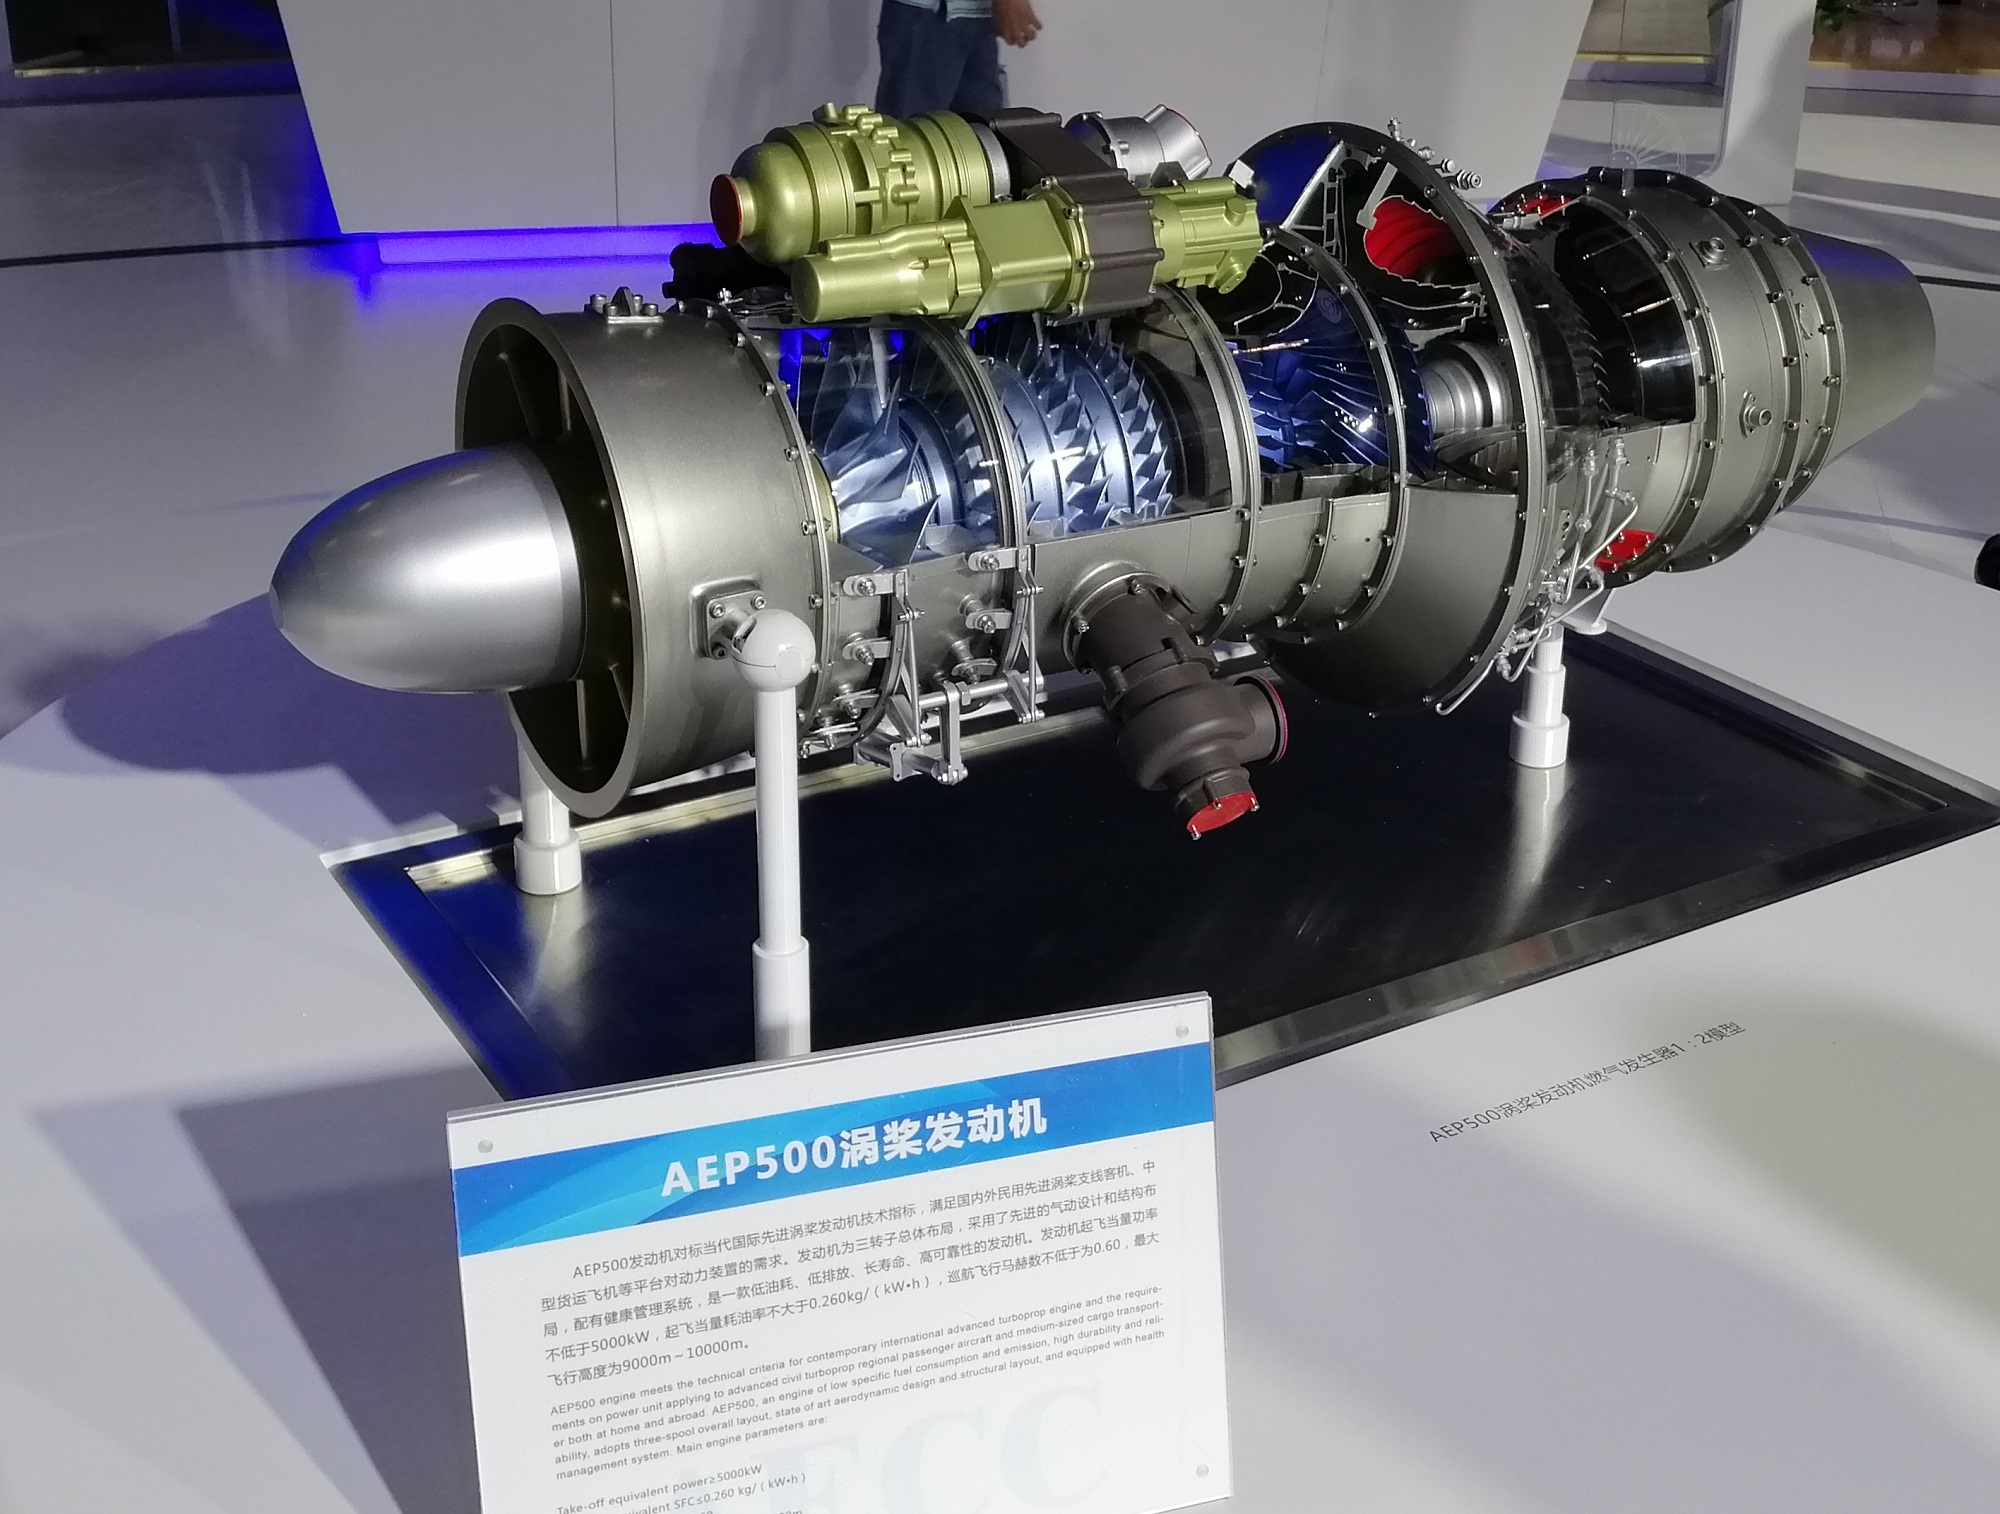 AEP500航空发动机3d打印模型制作